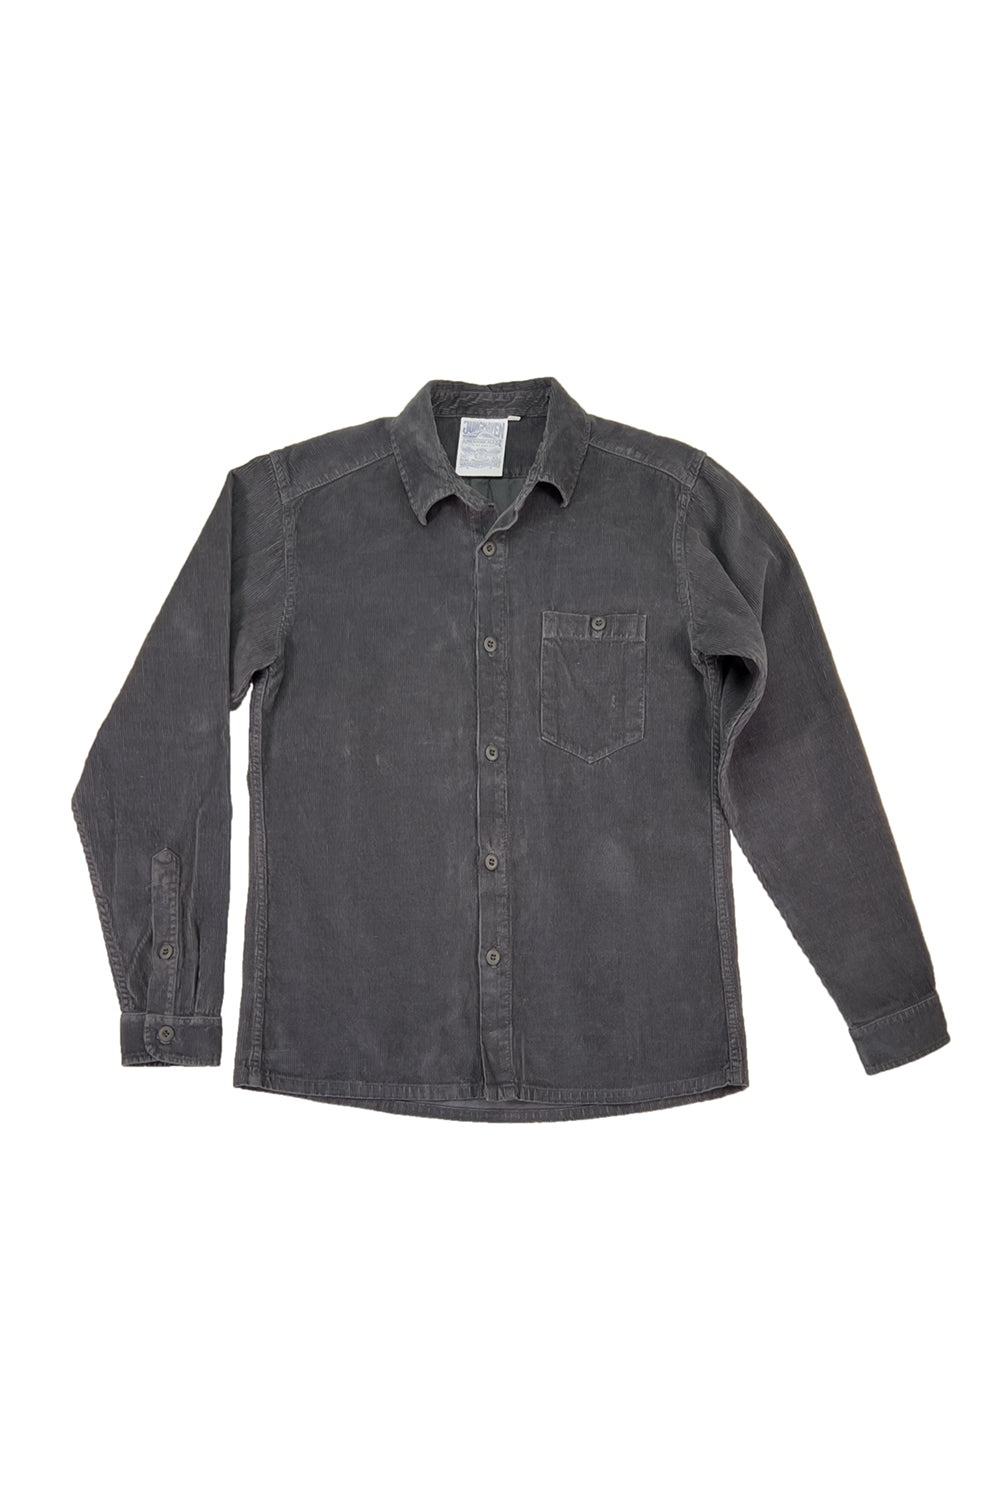 Ventura Shirt | Jungmaven Hemp Clothing & Accessories / Color: Diesel Gray